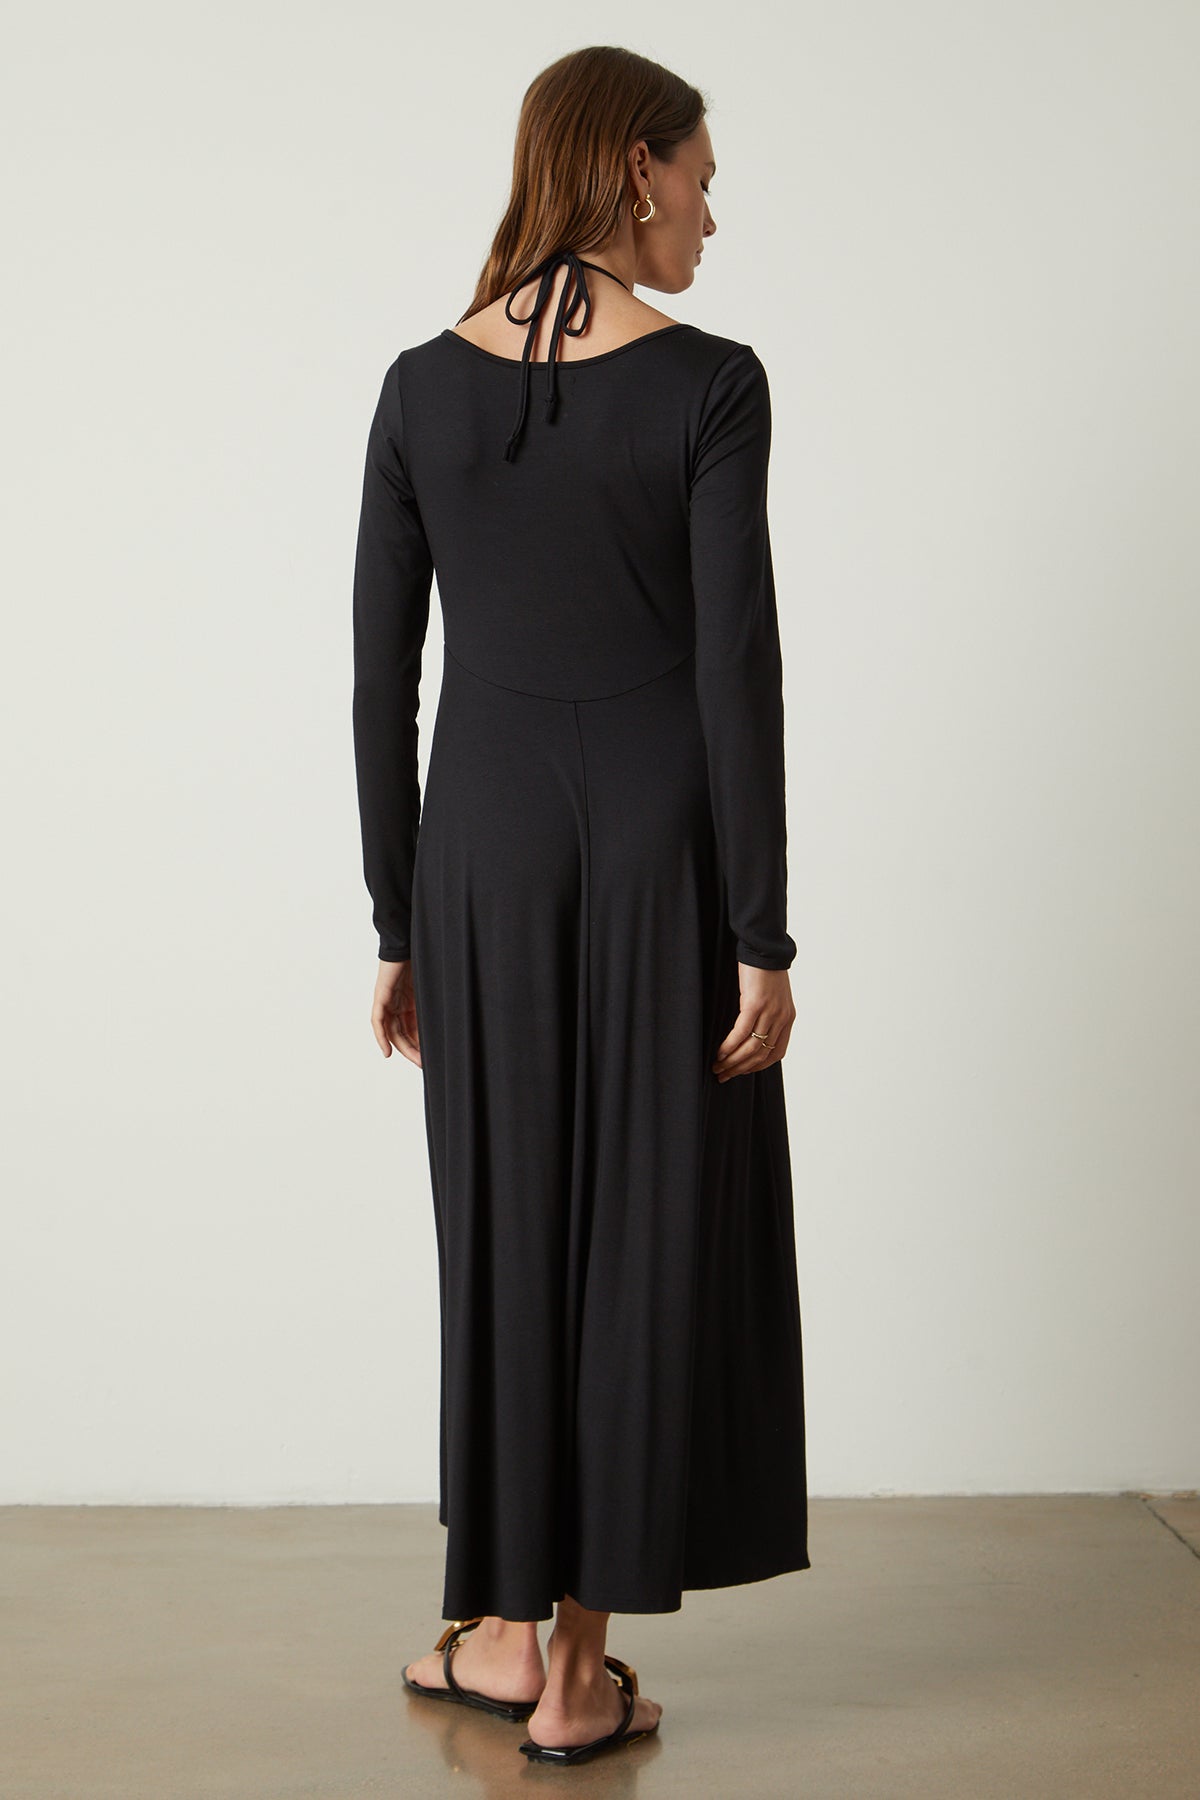 Jules Maxi Dress in black full length back-26143151620289